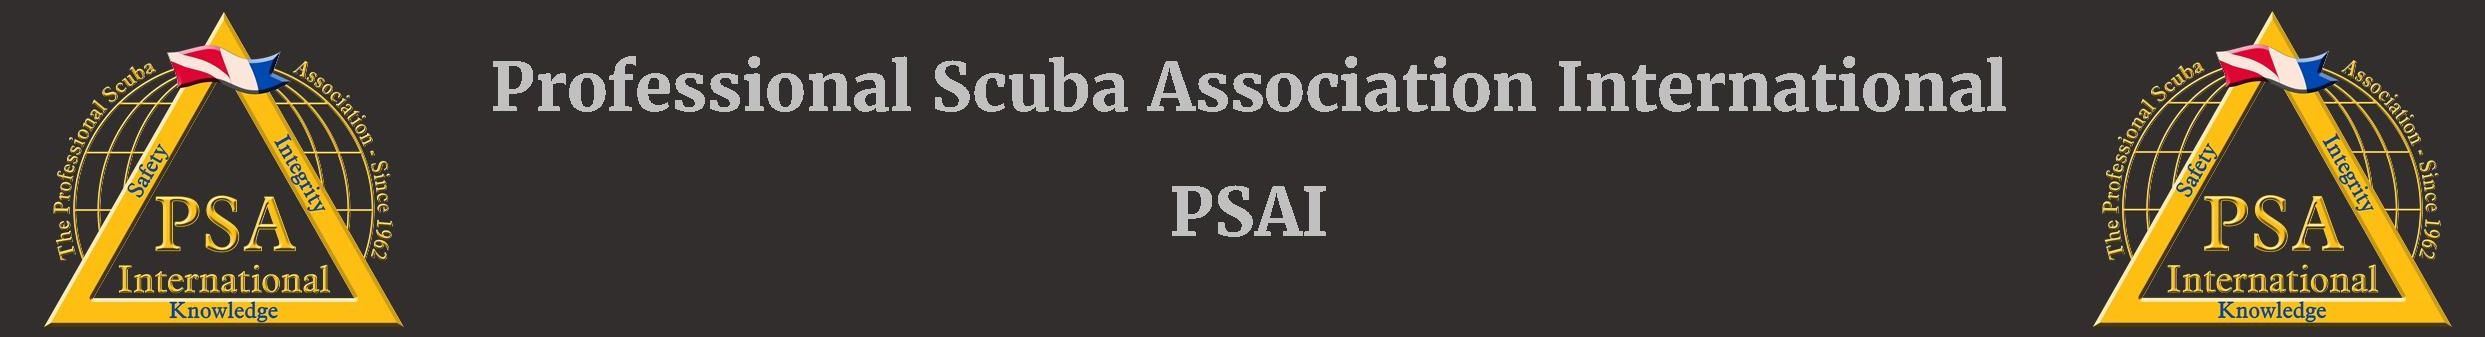 Professional Scuba Association International PSAI